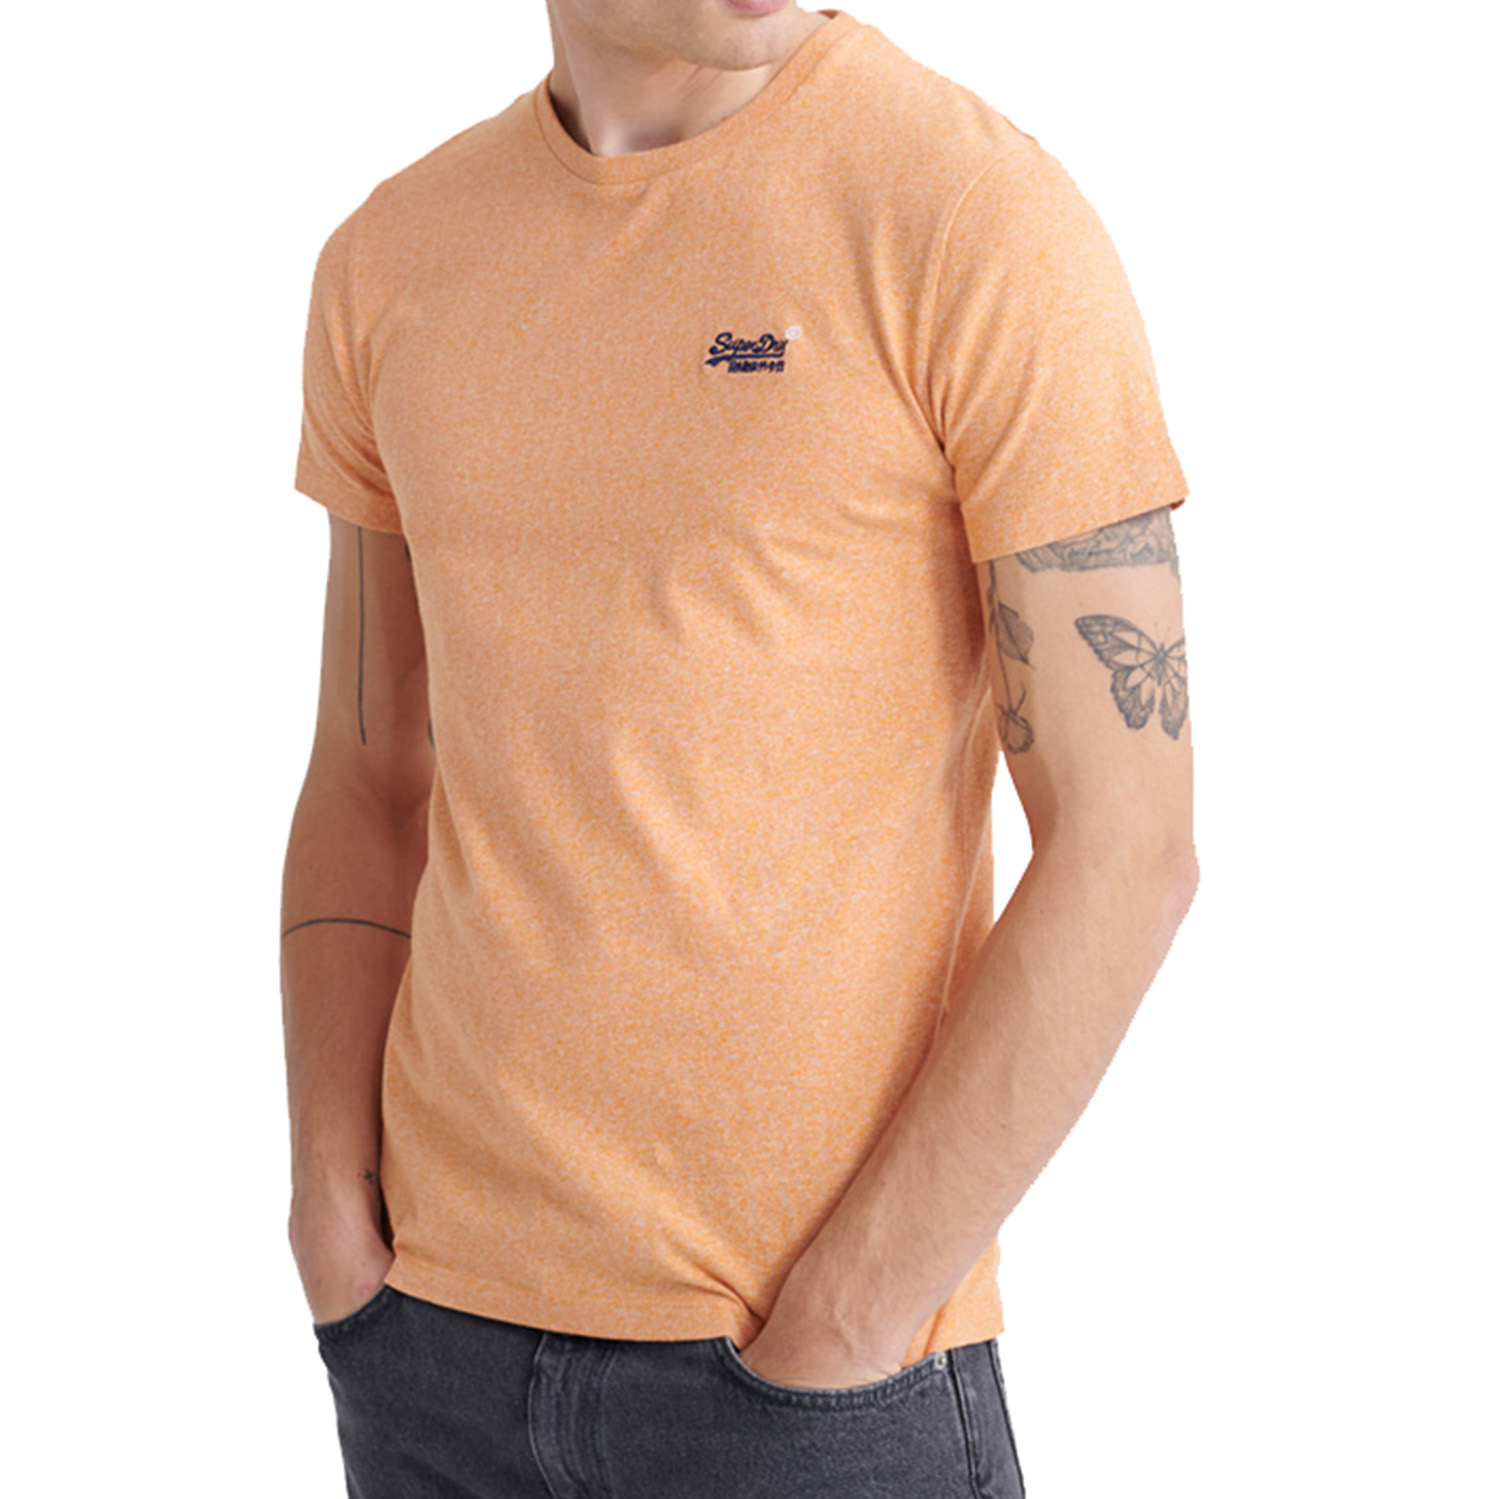 Superdry Herren Orange Label Vintage Embroidery Tee T-Shirt M10000119A orange